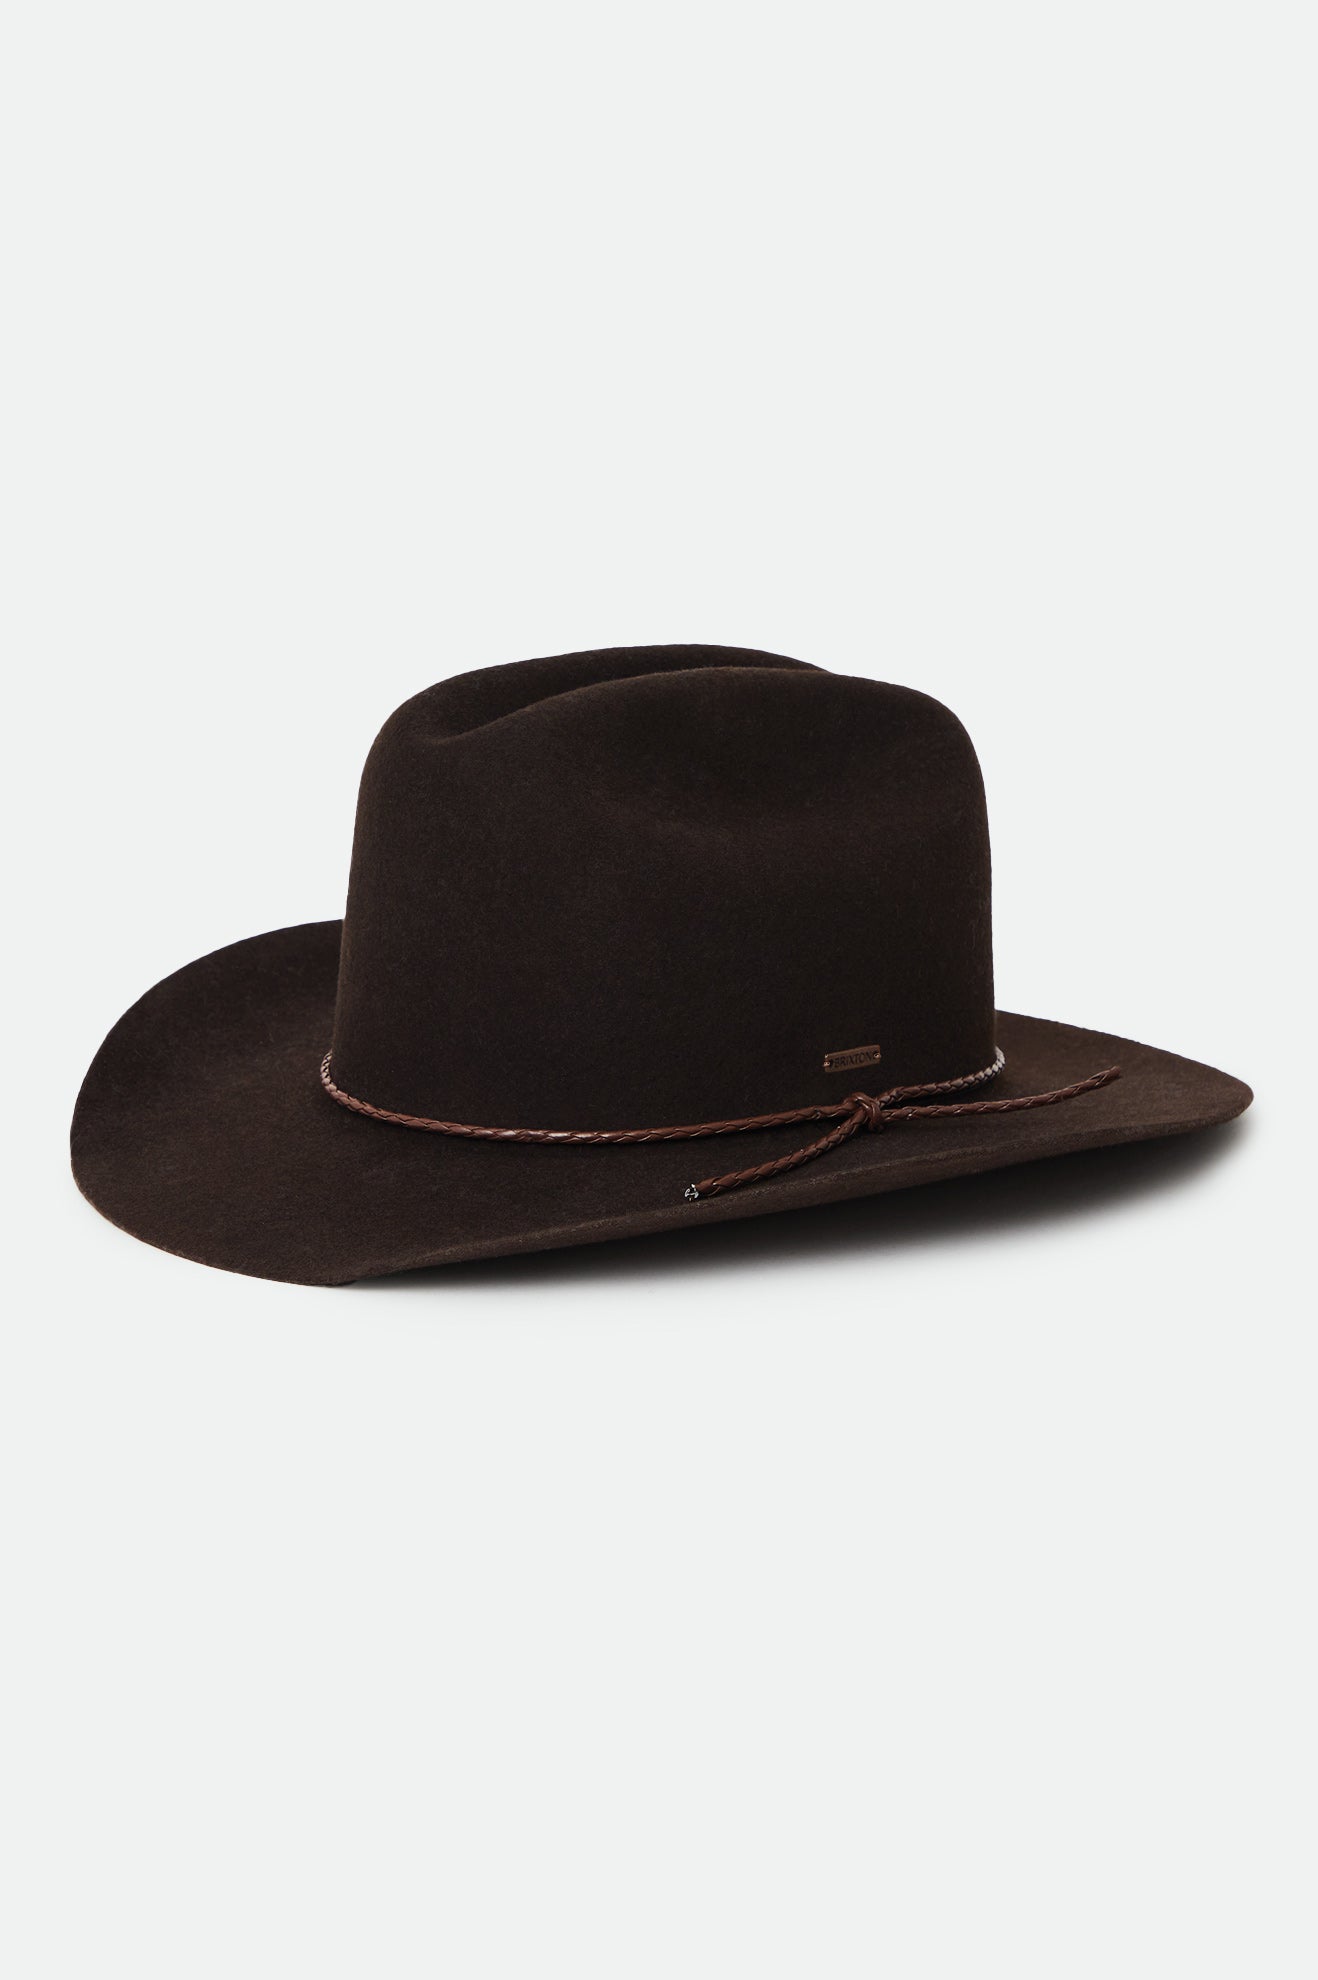 Vasquez Reserve Cowboy Hat - Chocolate